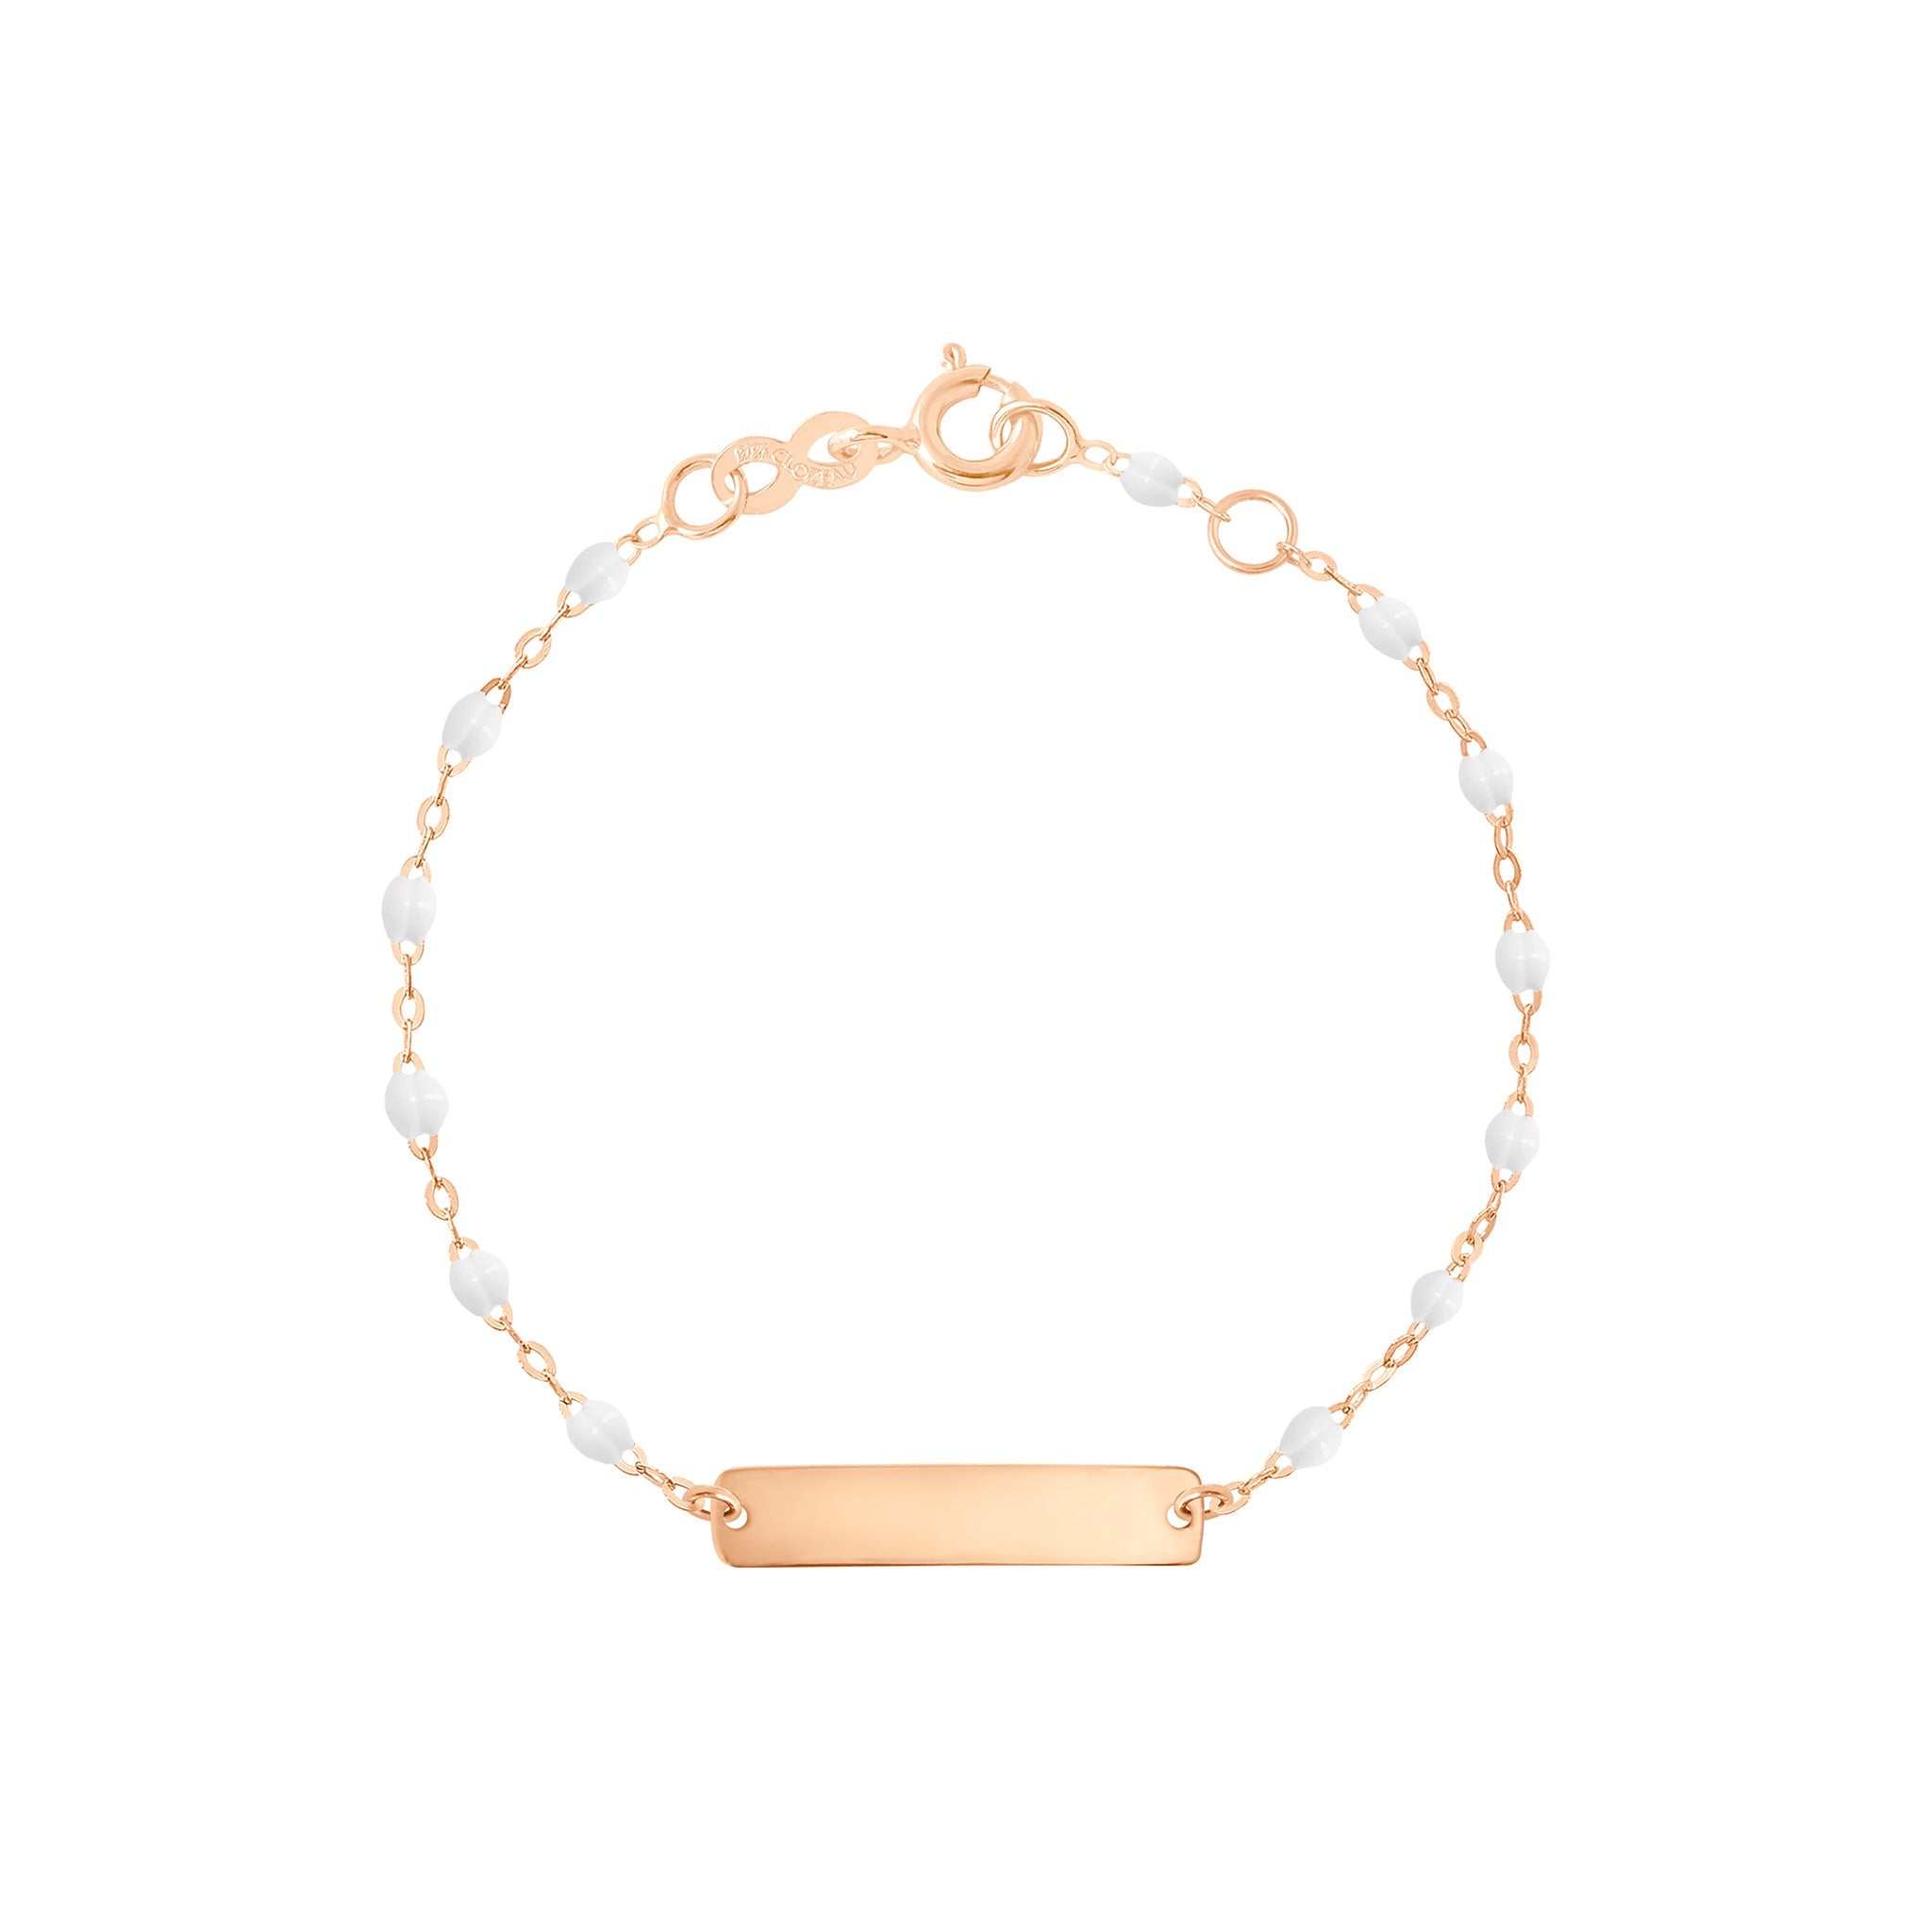 Bracelet blanc Little Gigi, plaque rectangle, or rose, 13 cm little gigi Référence :  b3lg001r0113xx -1